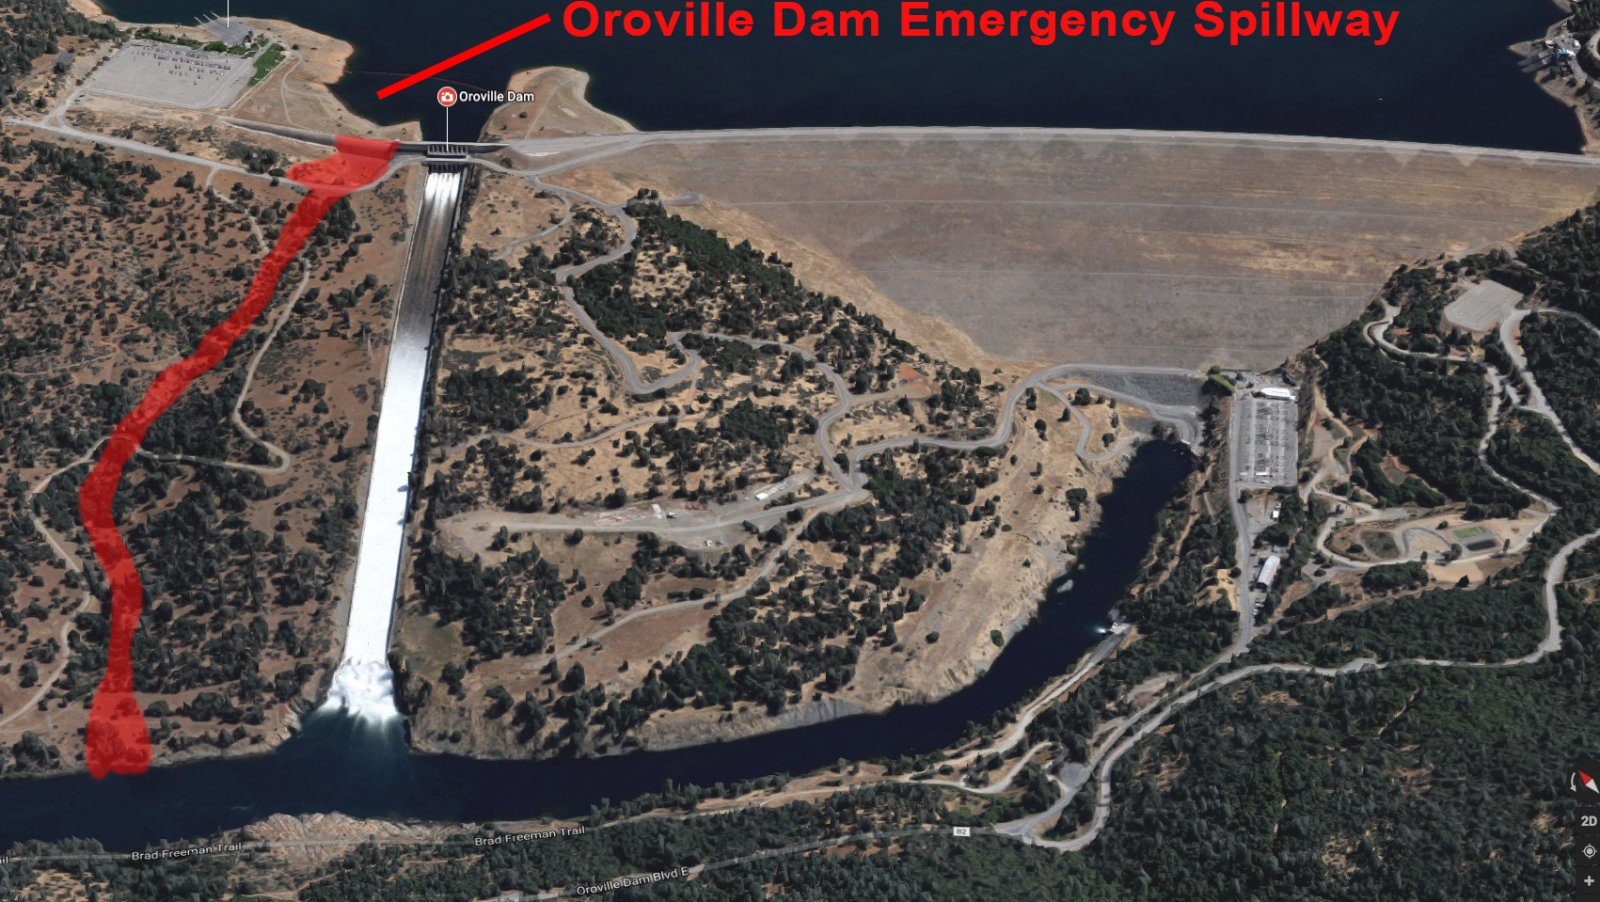  Oroville dam